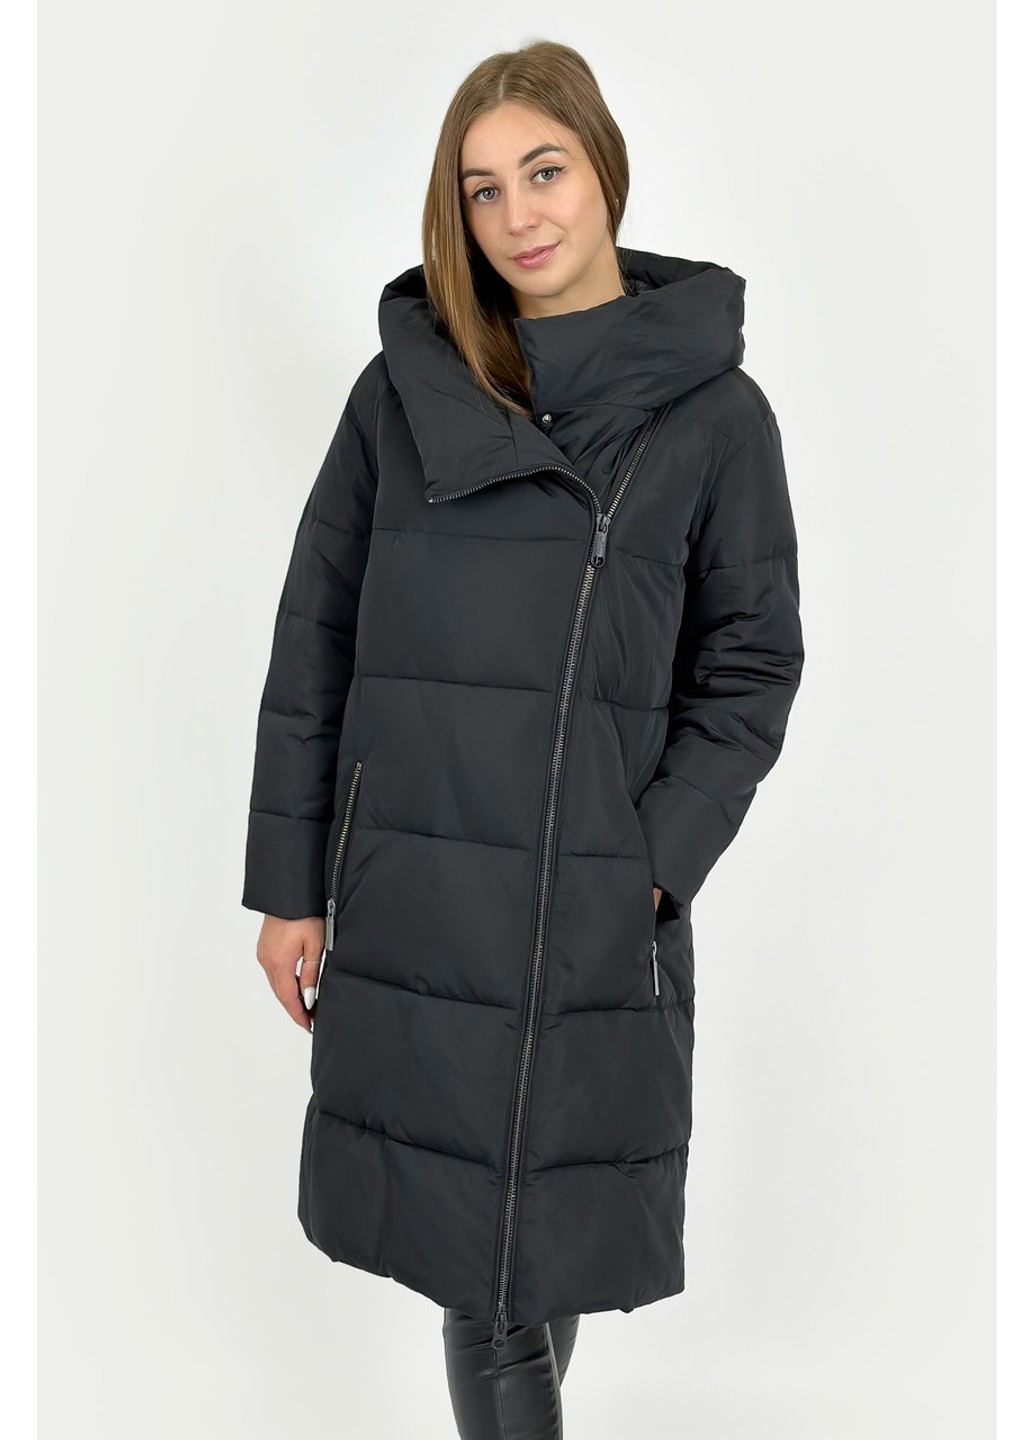 Черная зимняя куртка w20-12024-200 Finn Flare